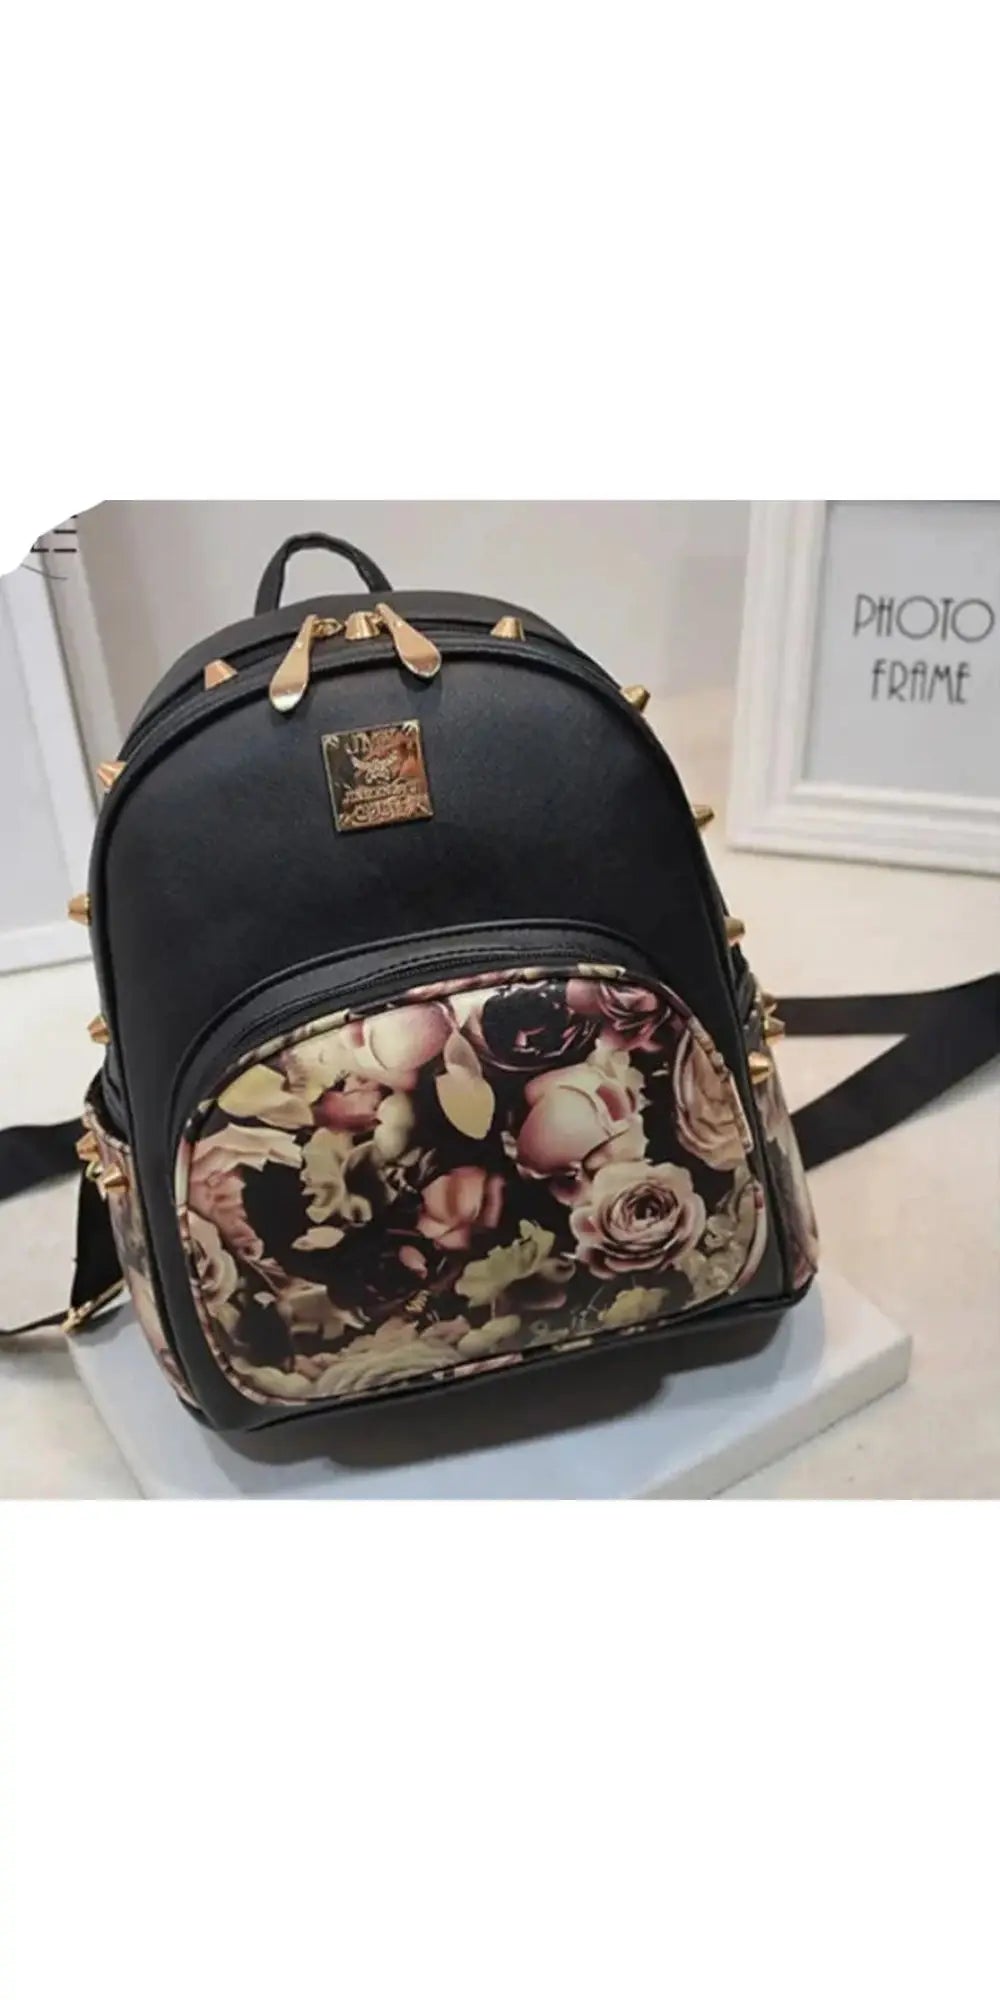 Floral print backpack - bags